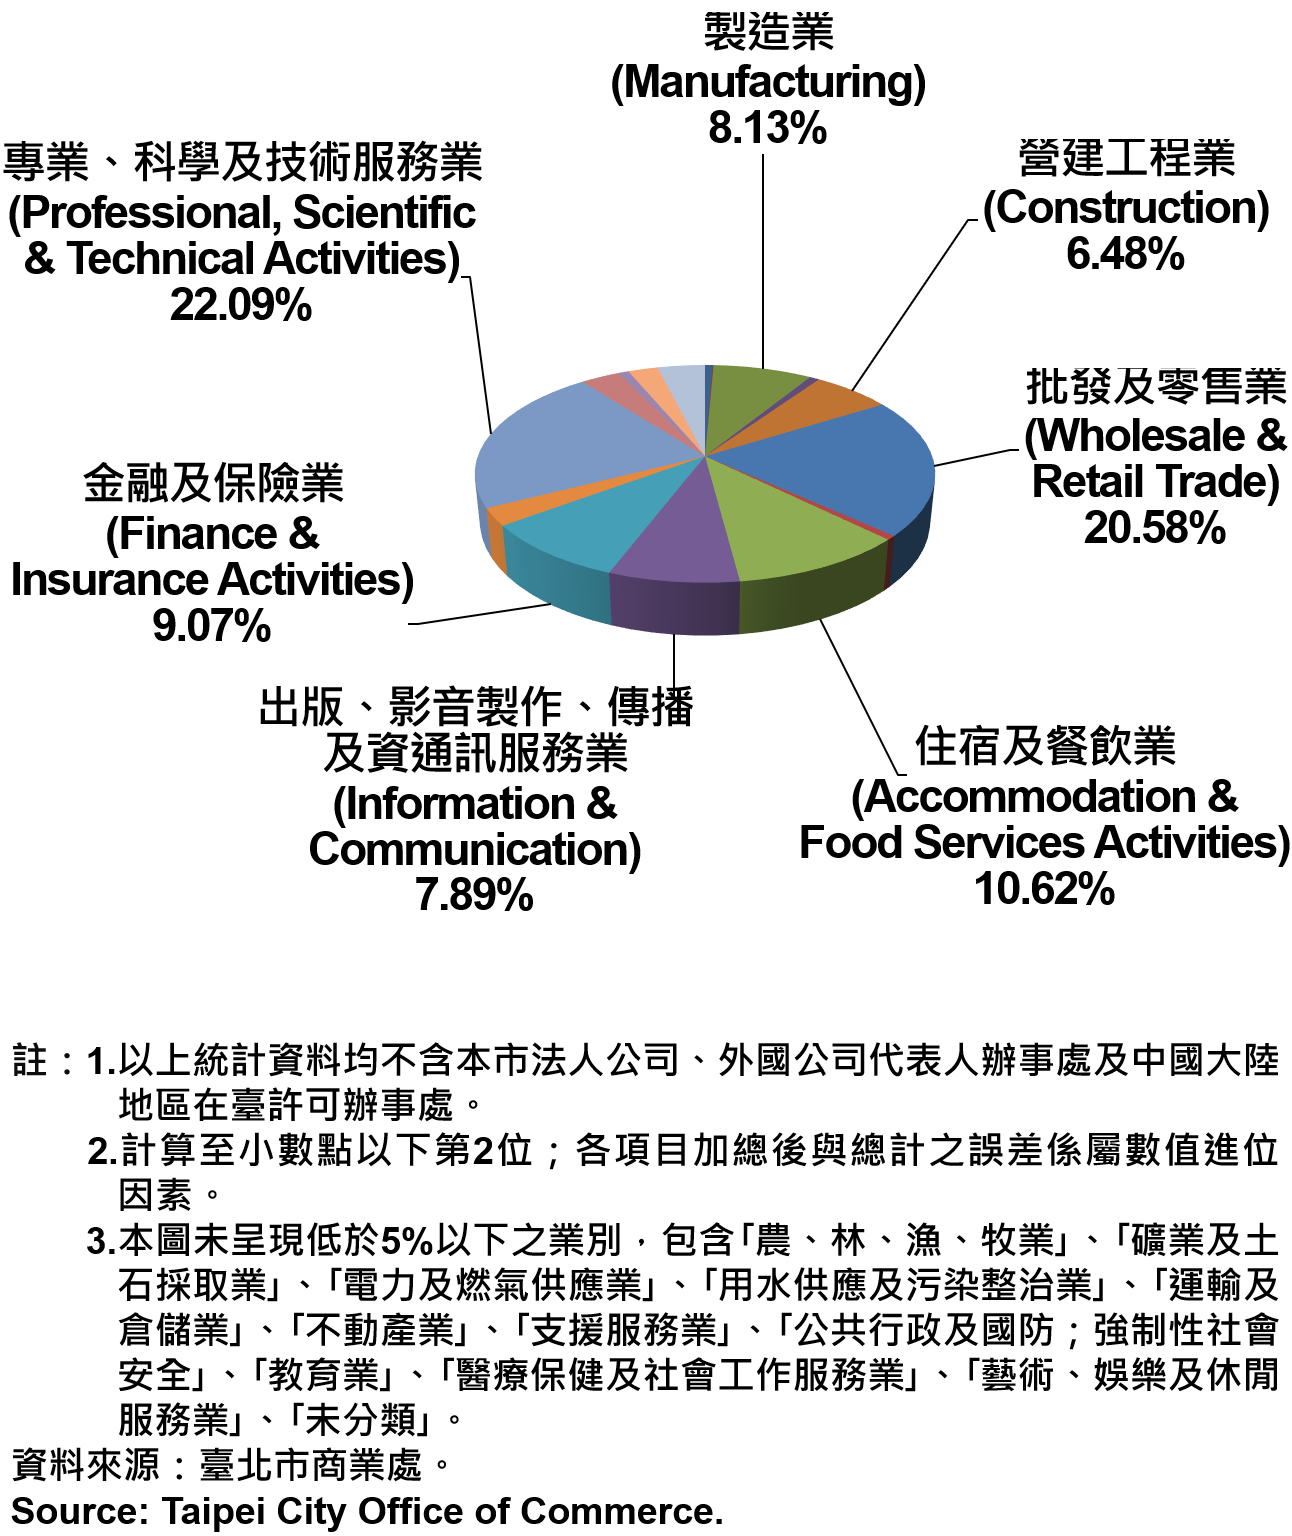 臺北市新創公司行號之業別分布情形—依新增家數—2020Q1 Newly Registered Companies in Taipei City by Industry- Number of Incorporation—2020Q1